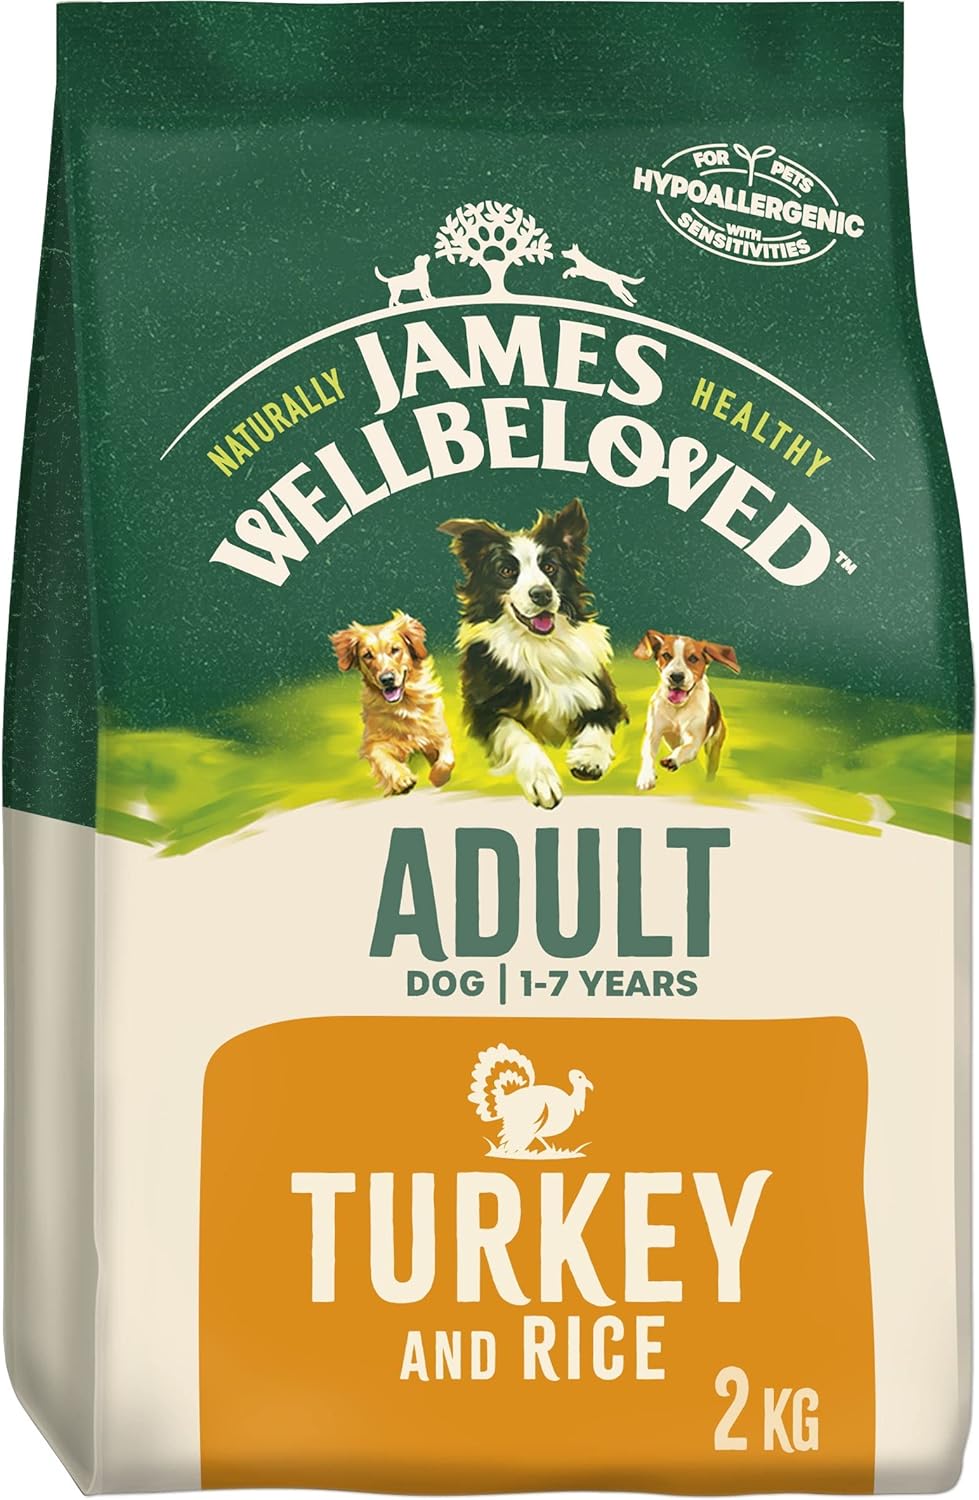 James Wellbeloved Adult Turkey & Rice 2 kg Bag, Hypoallergenic Dry Dog Food?02JAT21